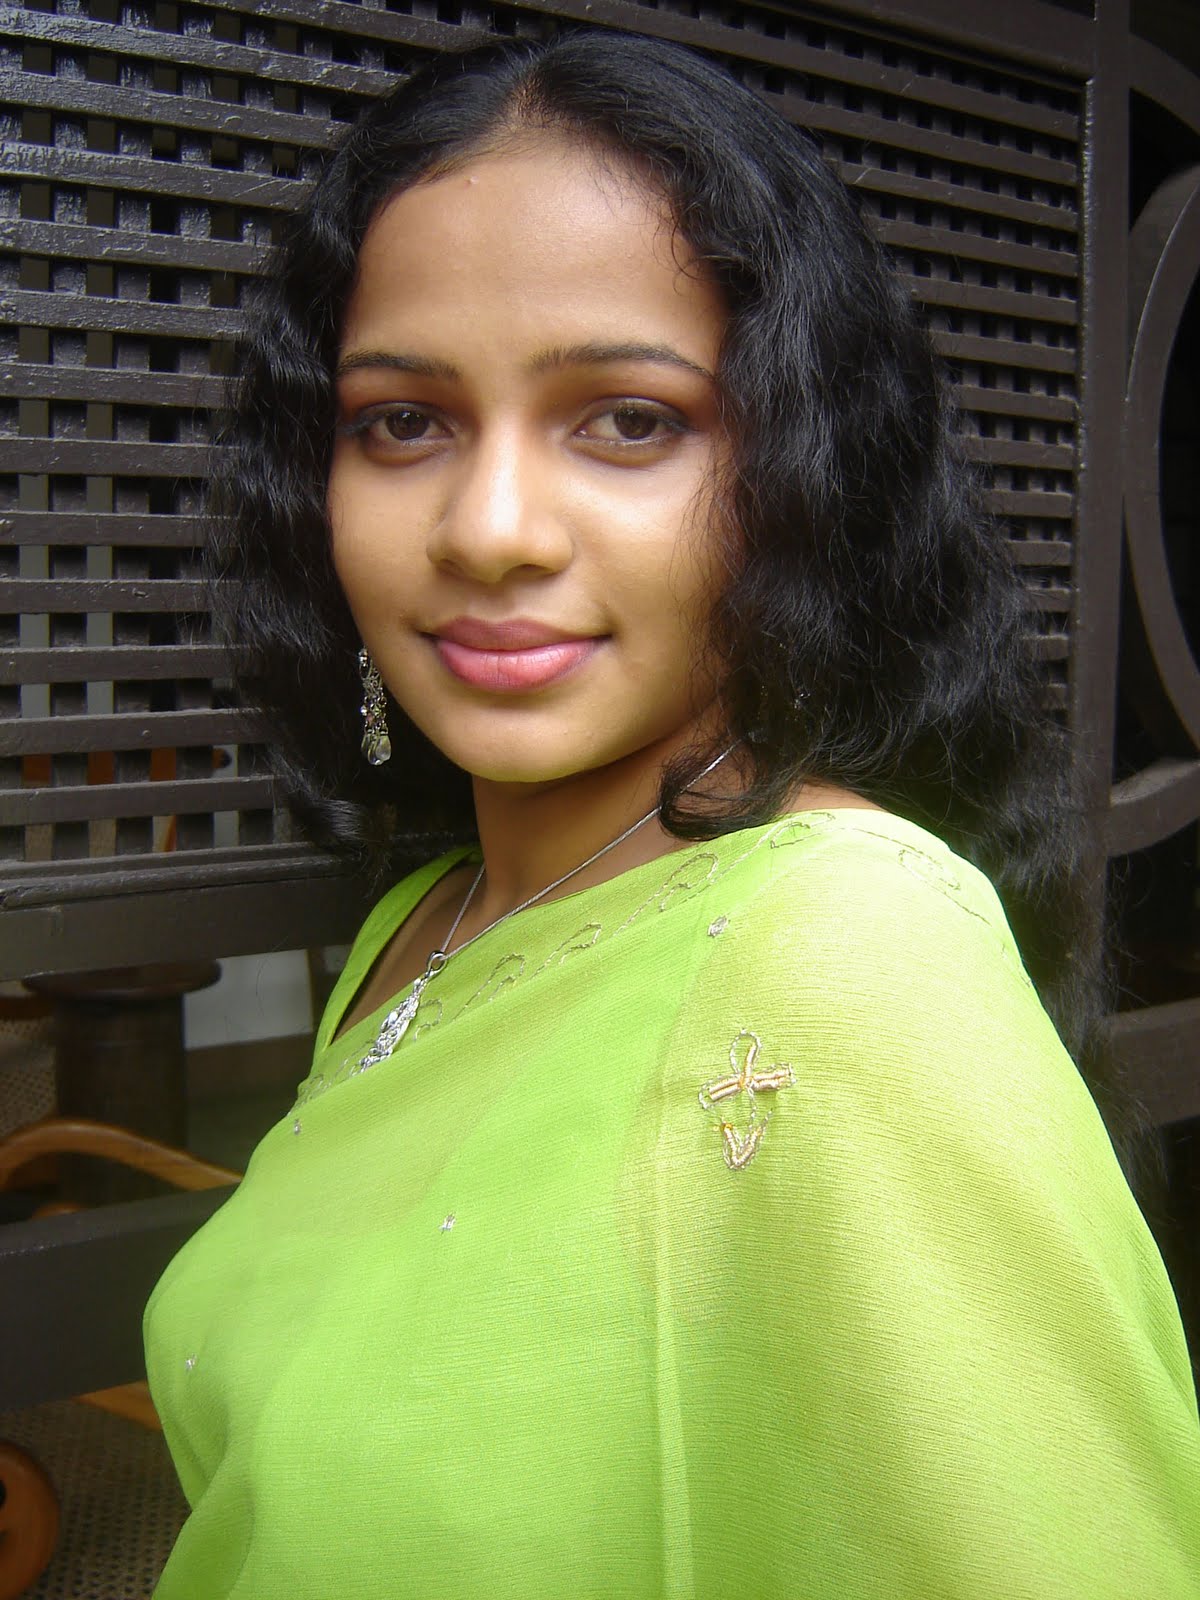 http://3.bp.blogspot.com/-WBu7W0KIrI0/TZwcbwdMfgI/AAAAAAAAVAo/I2S_u_7ezjc/s1600/Umayangana_Sri_Lankan_Teledrama_Actress_Pics_2.jpg